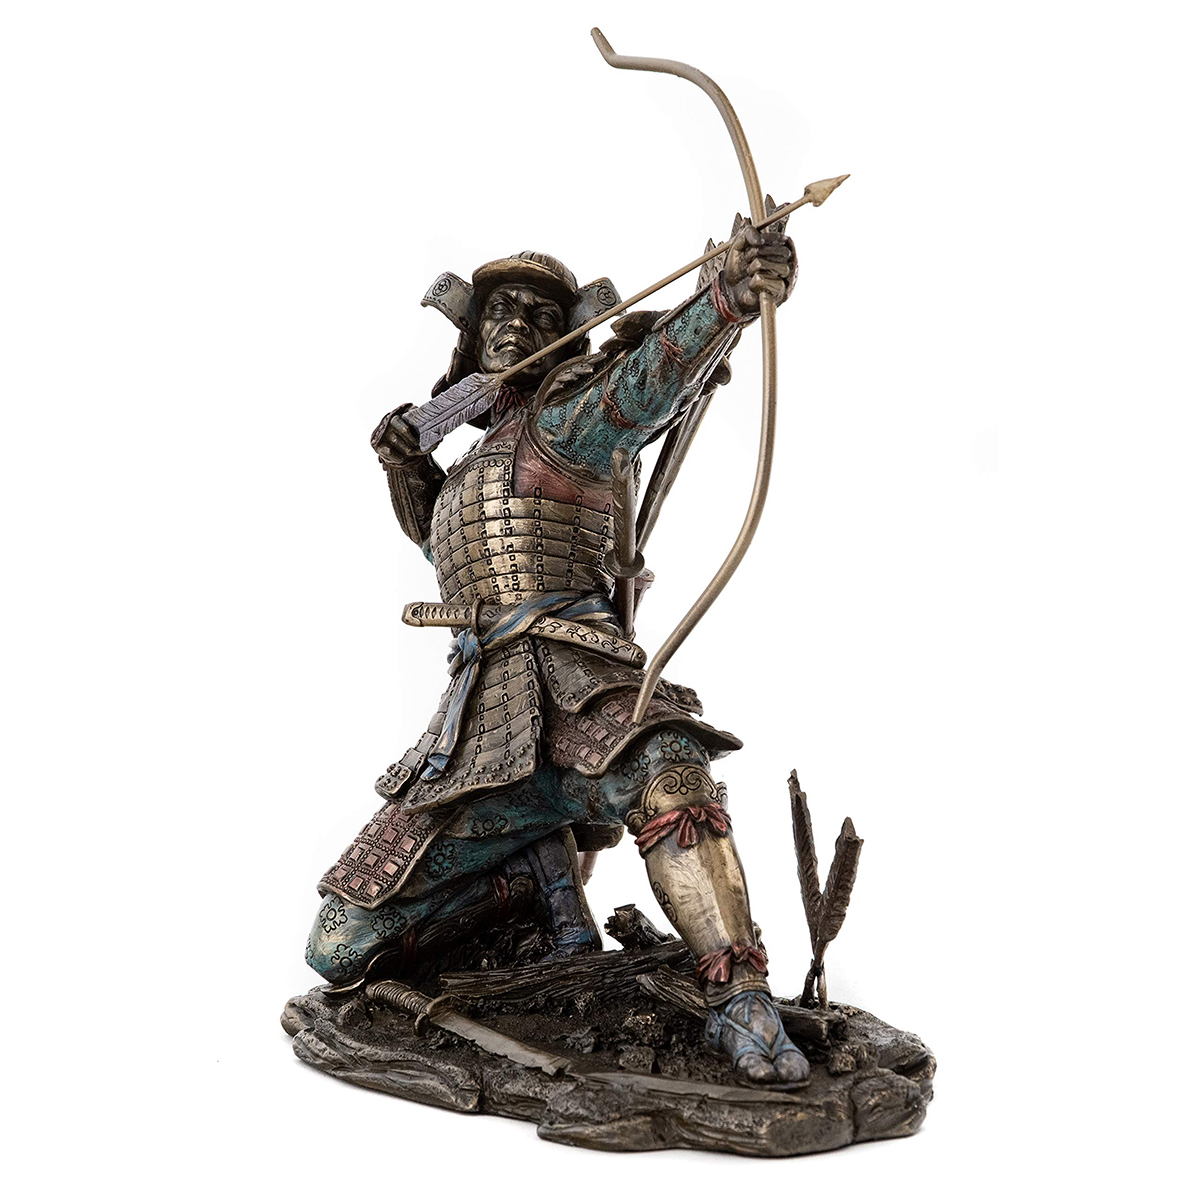 Samurai Warrior Statues for Sale